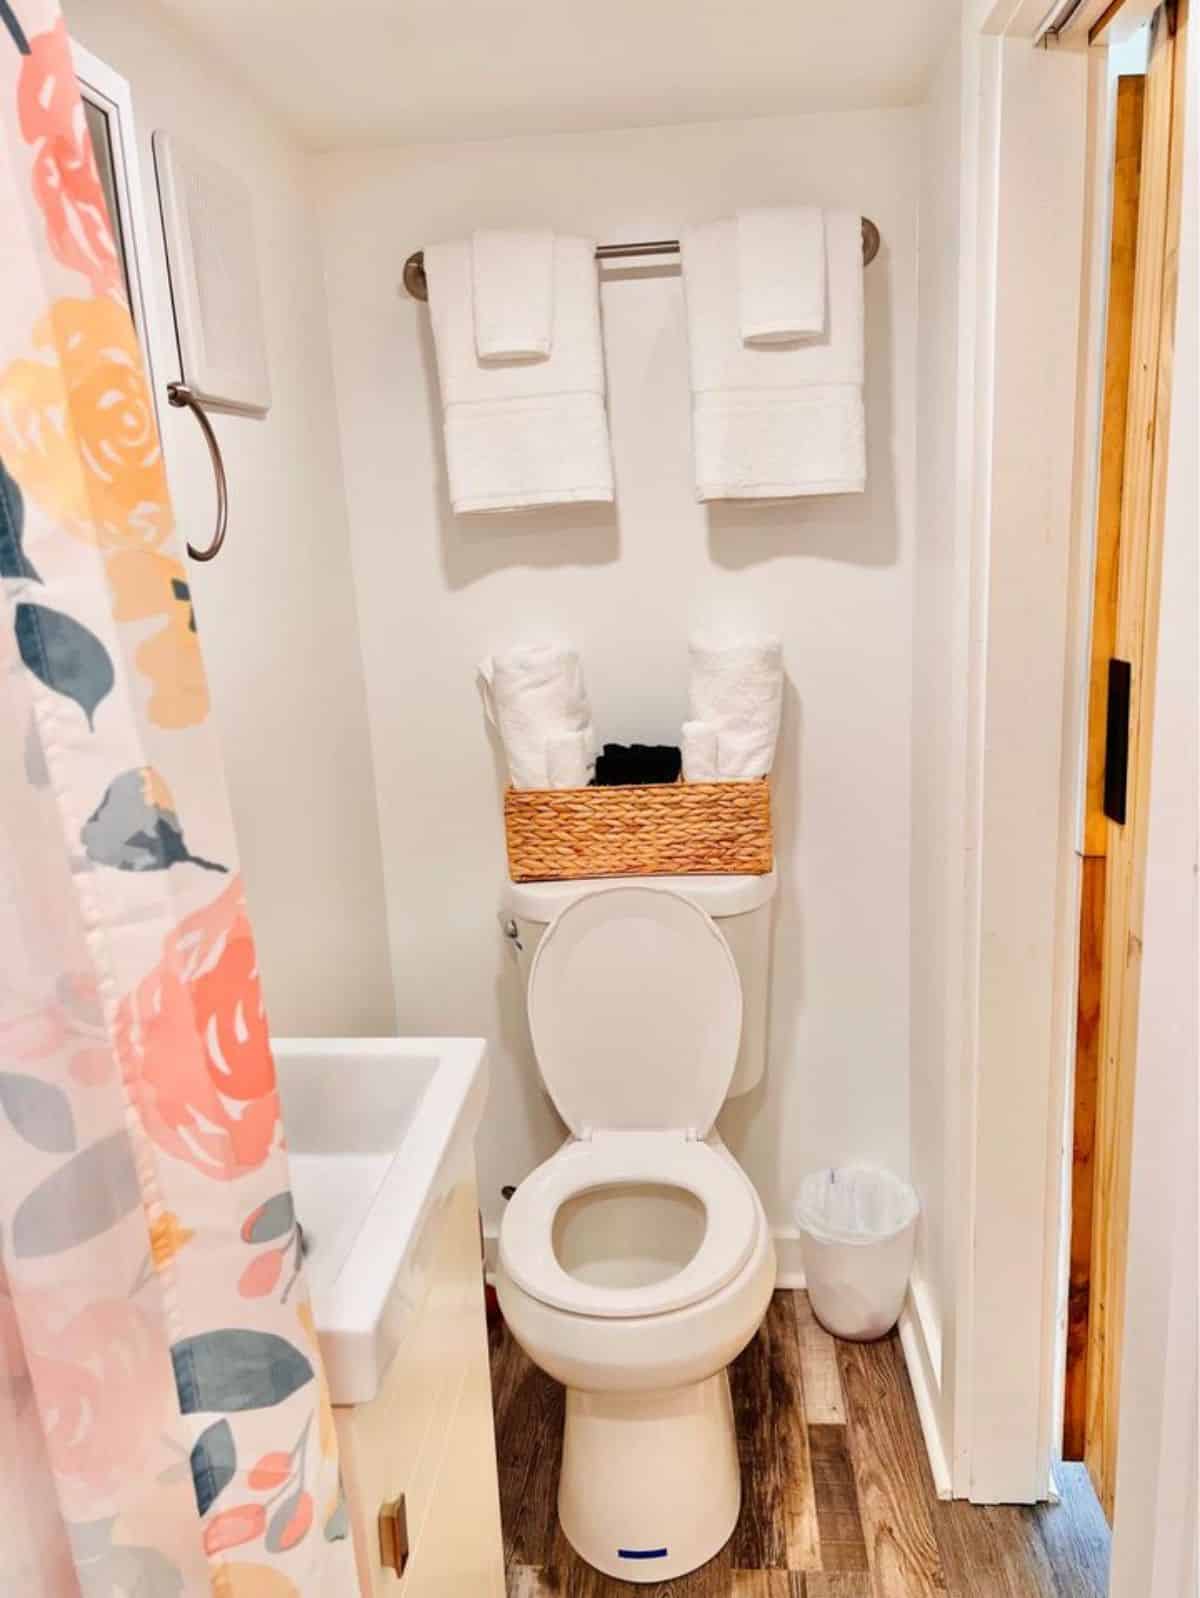 standard fittings in bathroom of remodeled home on wheels